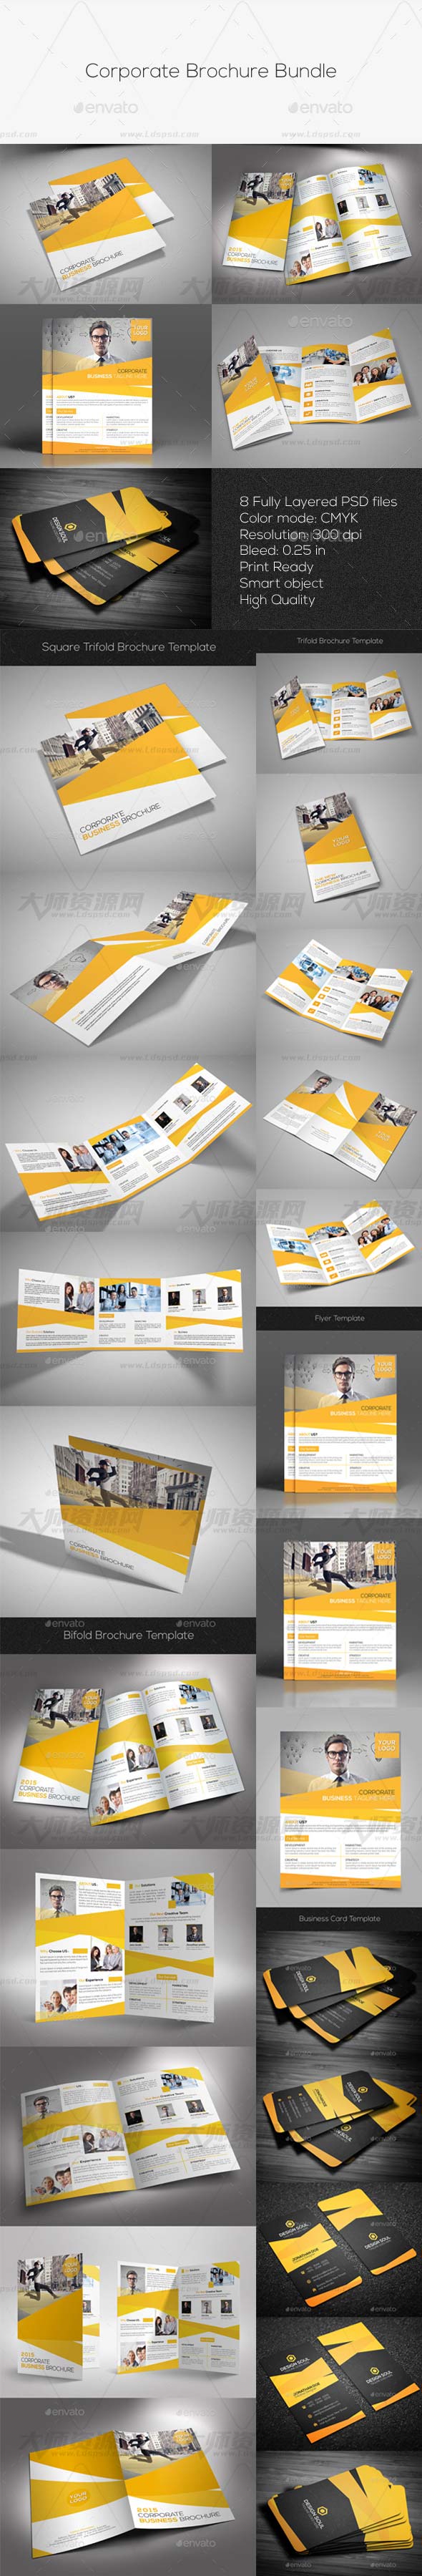 Corporate Brochure Bundle,企业品牌形象识别模板(合集版)